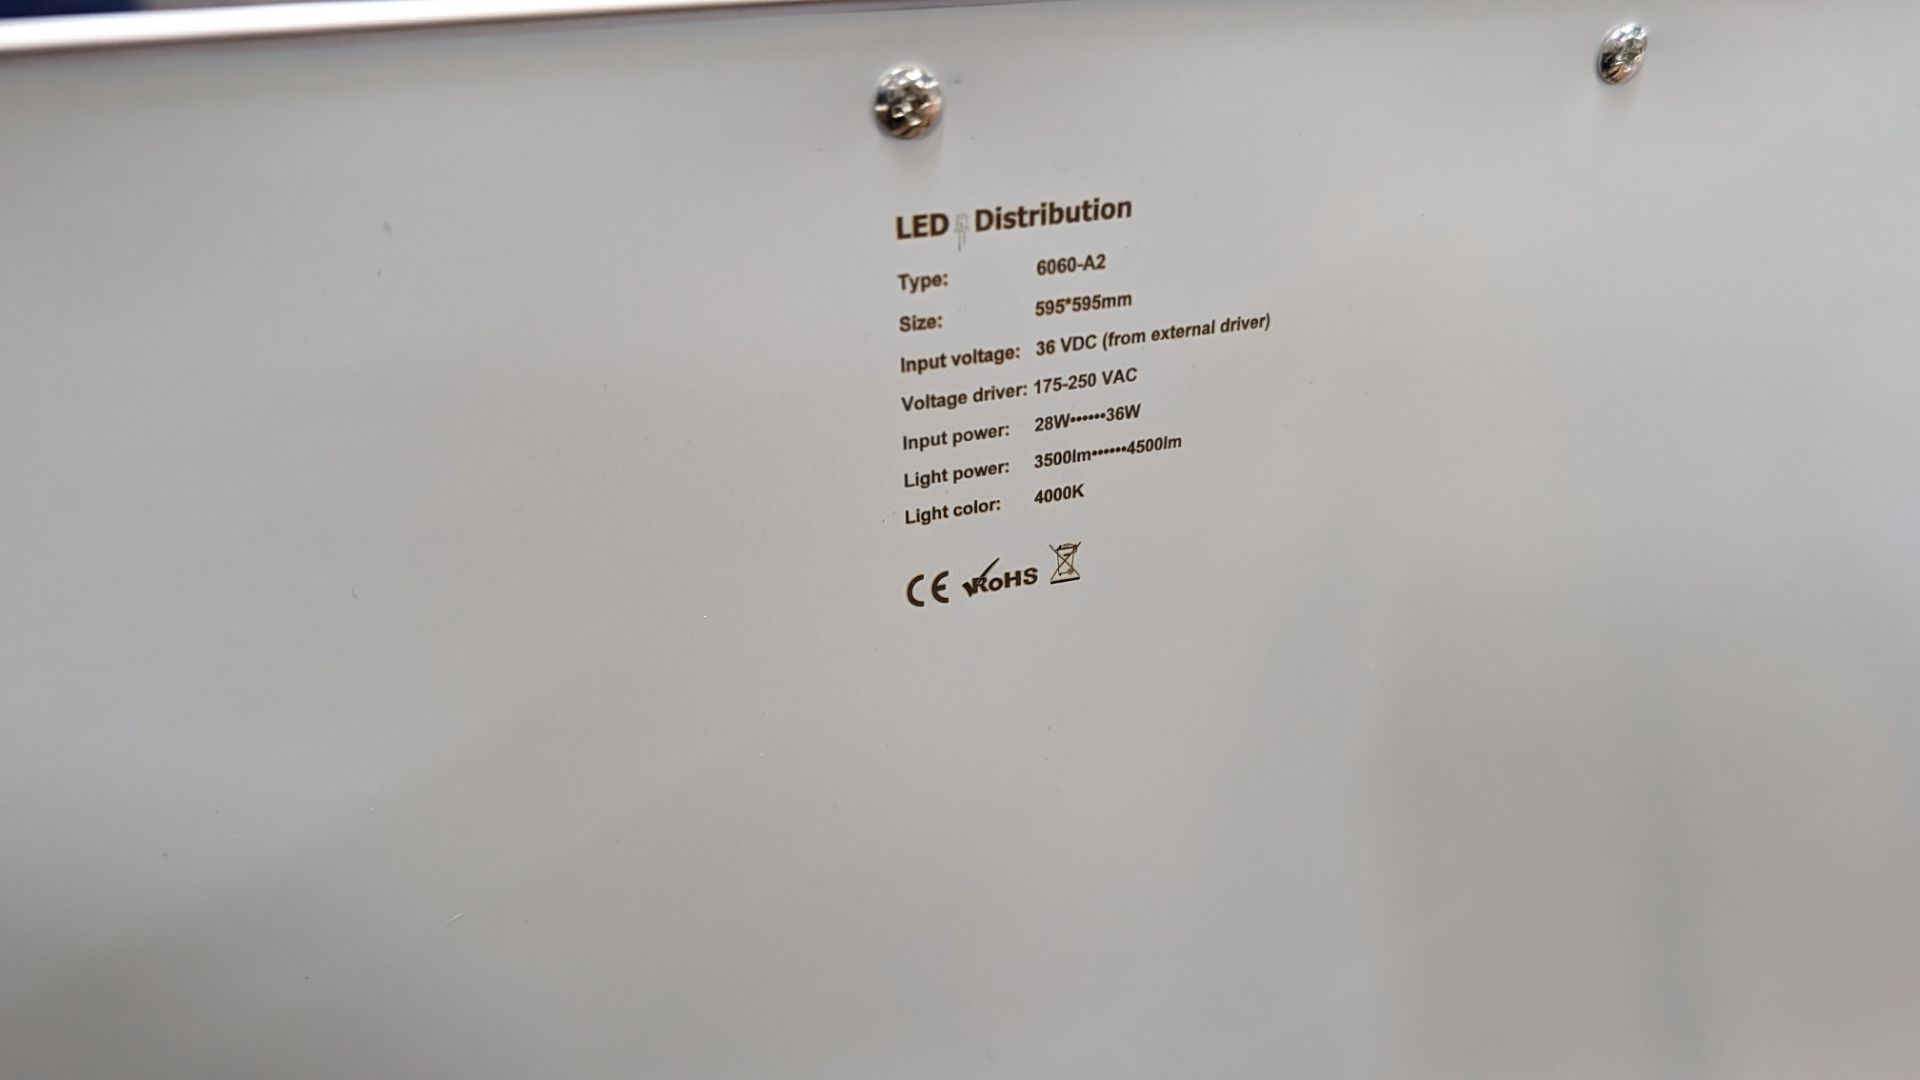 20 off Elegance Premium Eco 595mm x 595mm LED lighting panels. 4000k. 28/36w input power. 36w dri - Image 9 of 14